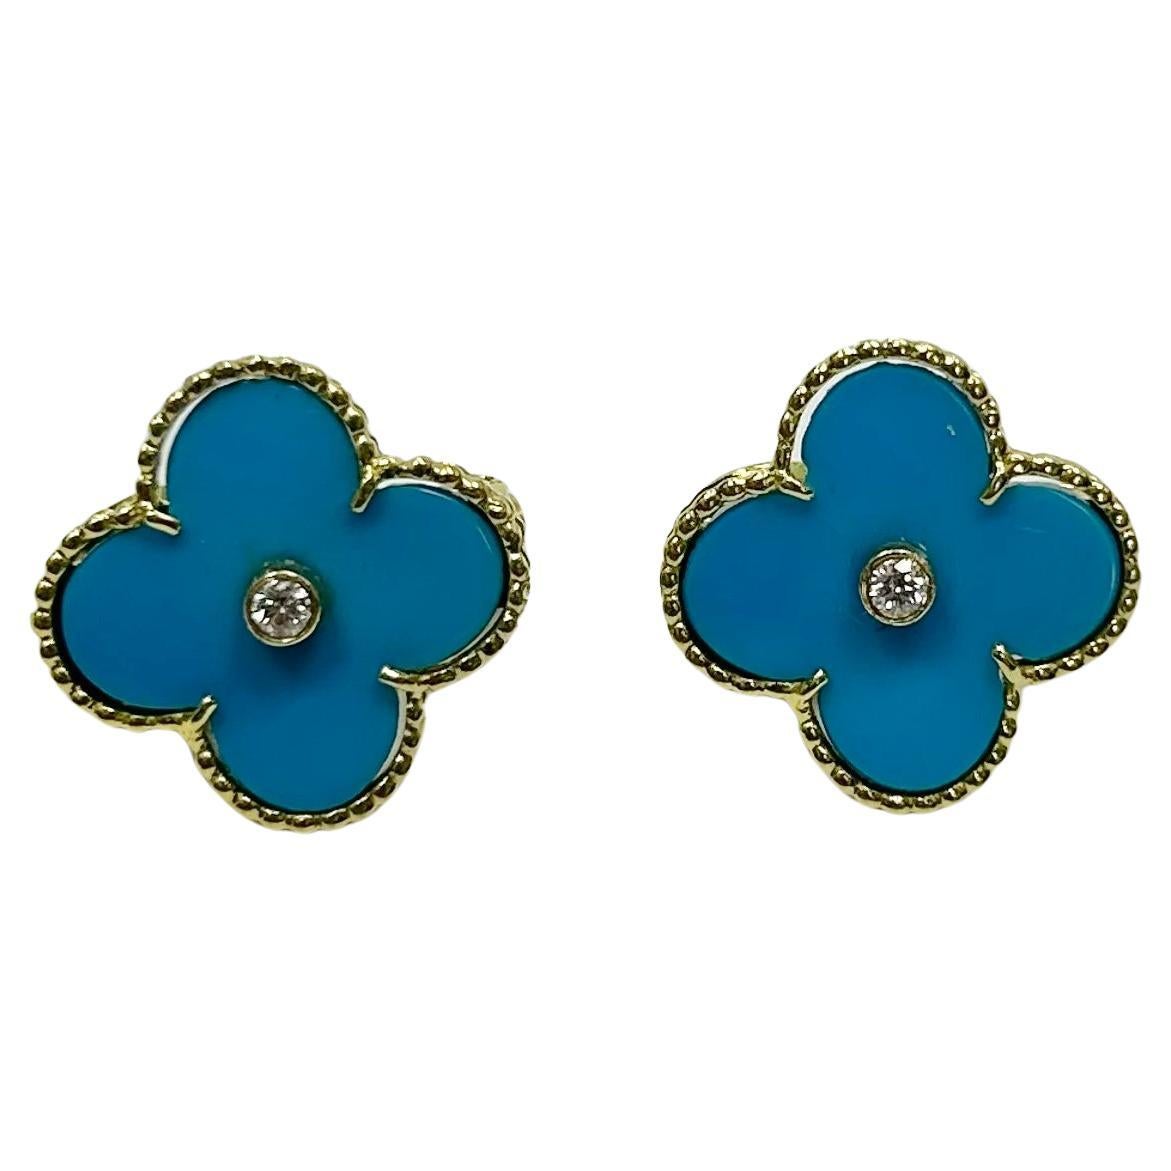 4 Leaf Clover 18k YG Turquoise Diamond Ear Clip Earrings